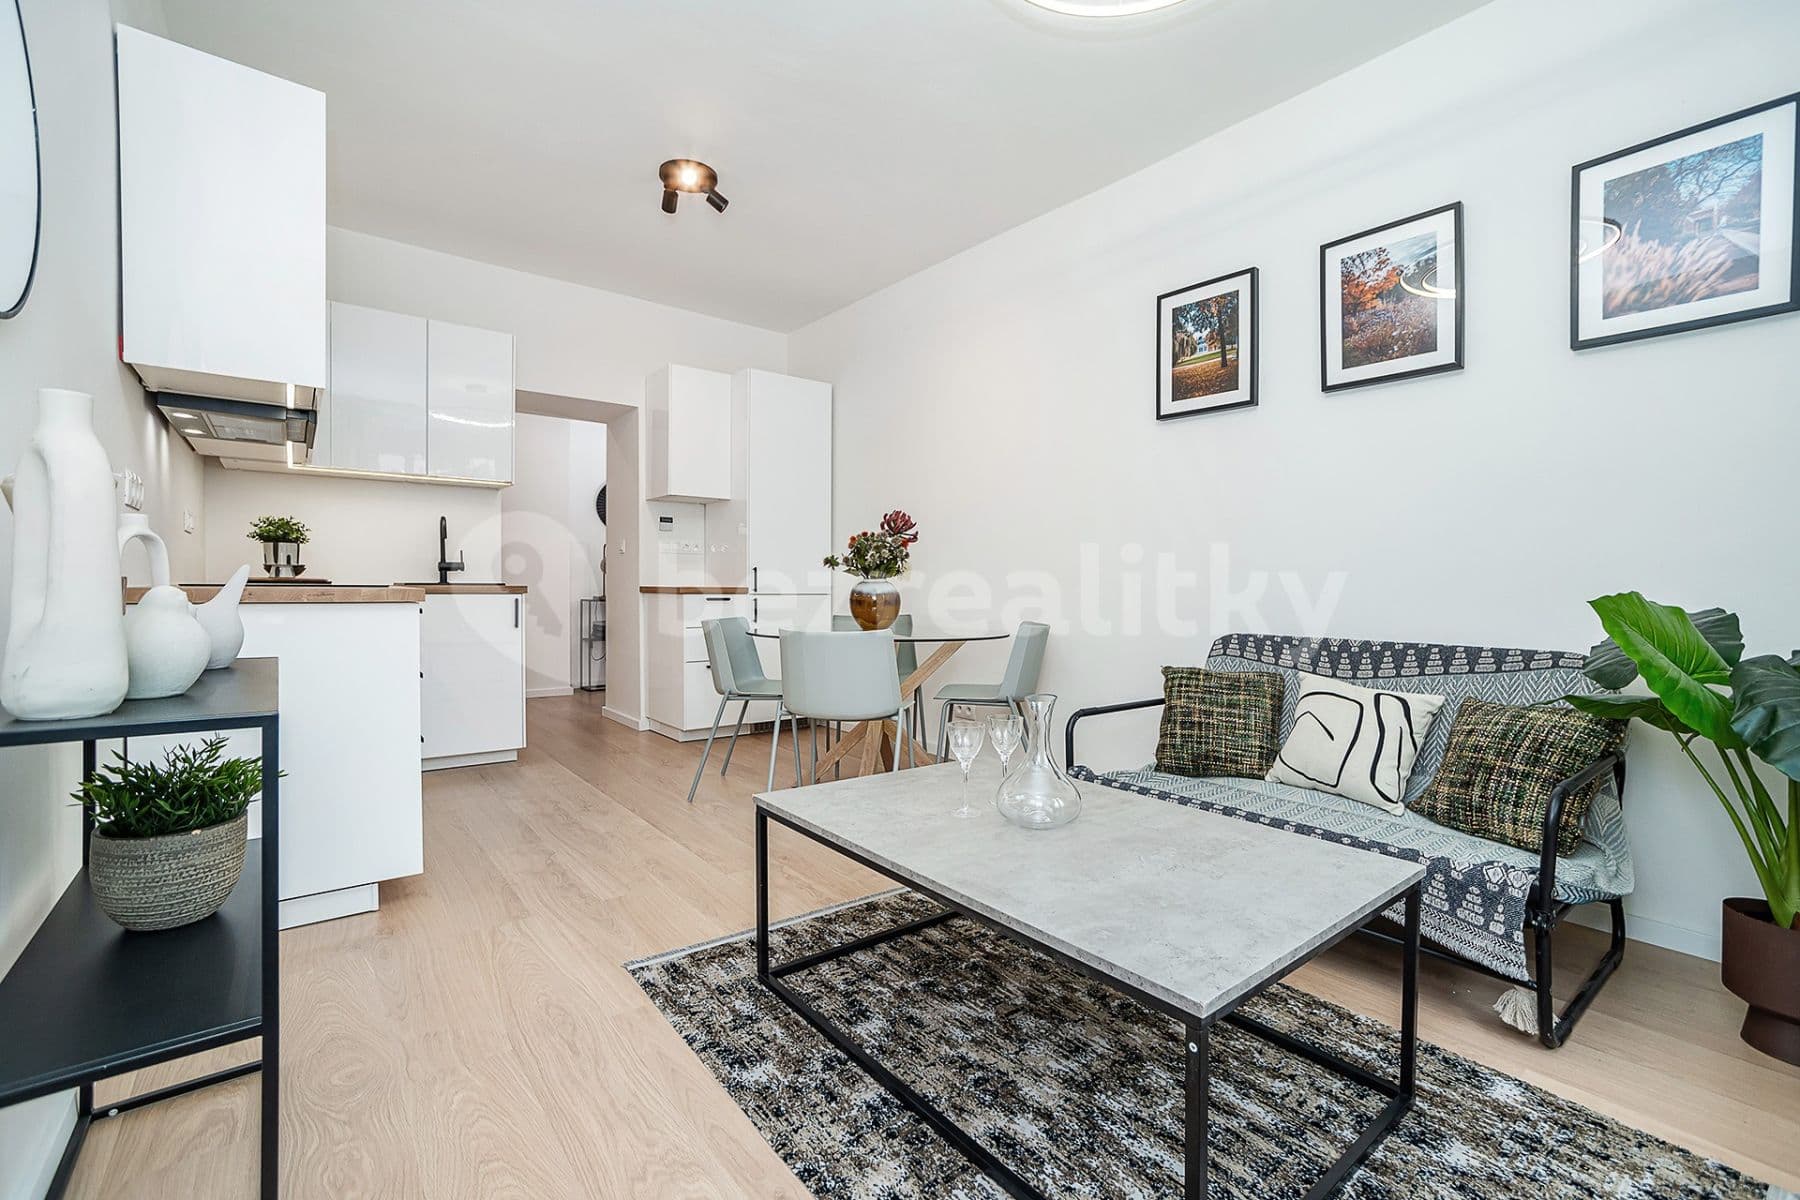 1 bedroom with open-plan kitchen flat for sale, 50 m², Na Pankráci, Prague, Prague